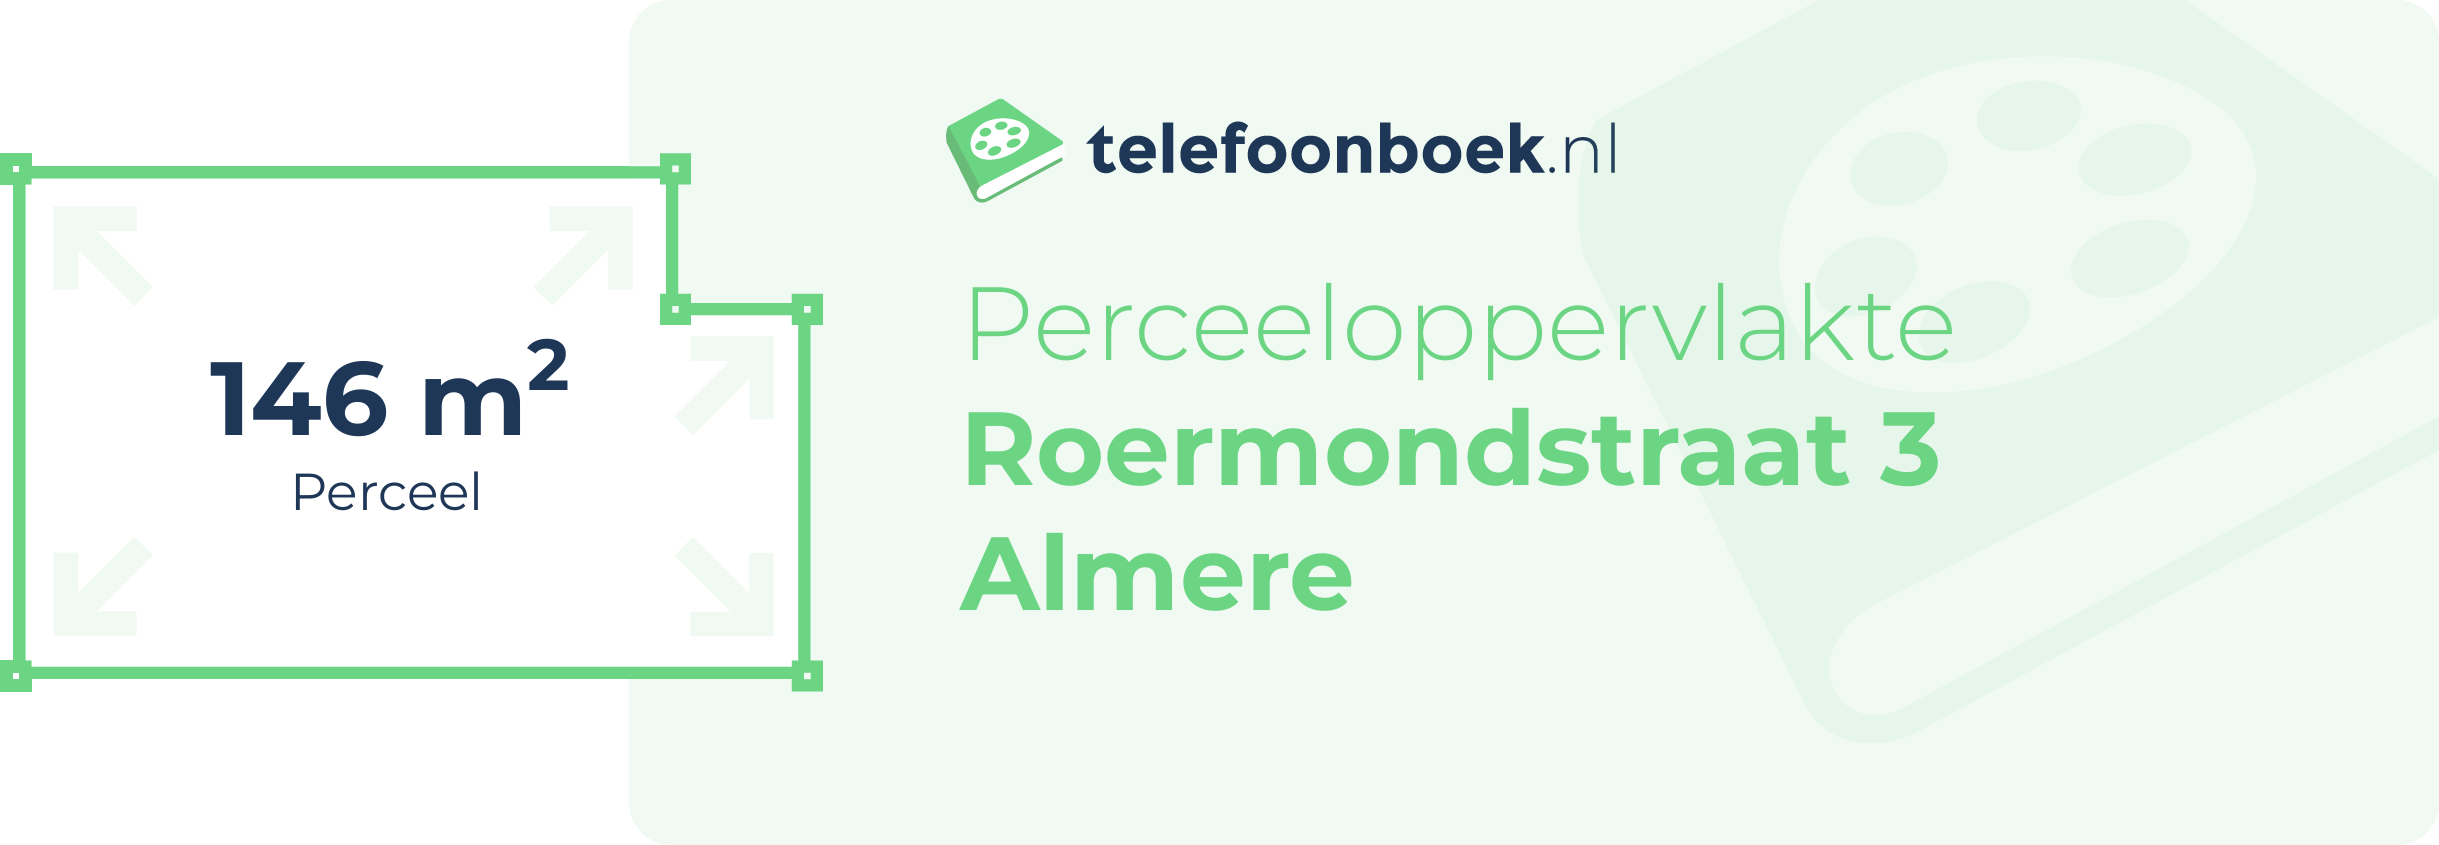 Perceeloppervlakte Roermondstraat 3 Almere